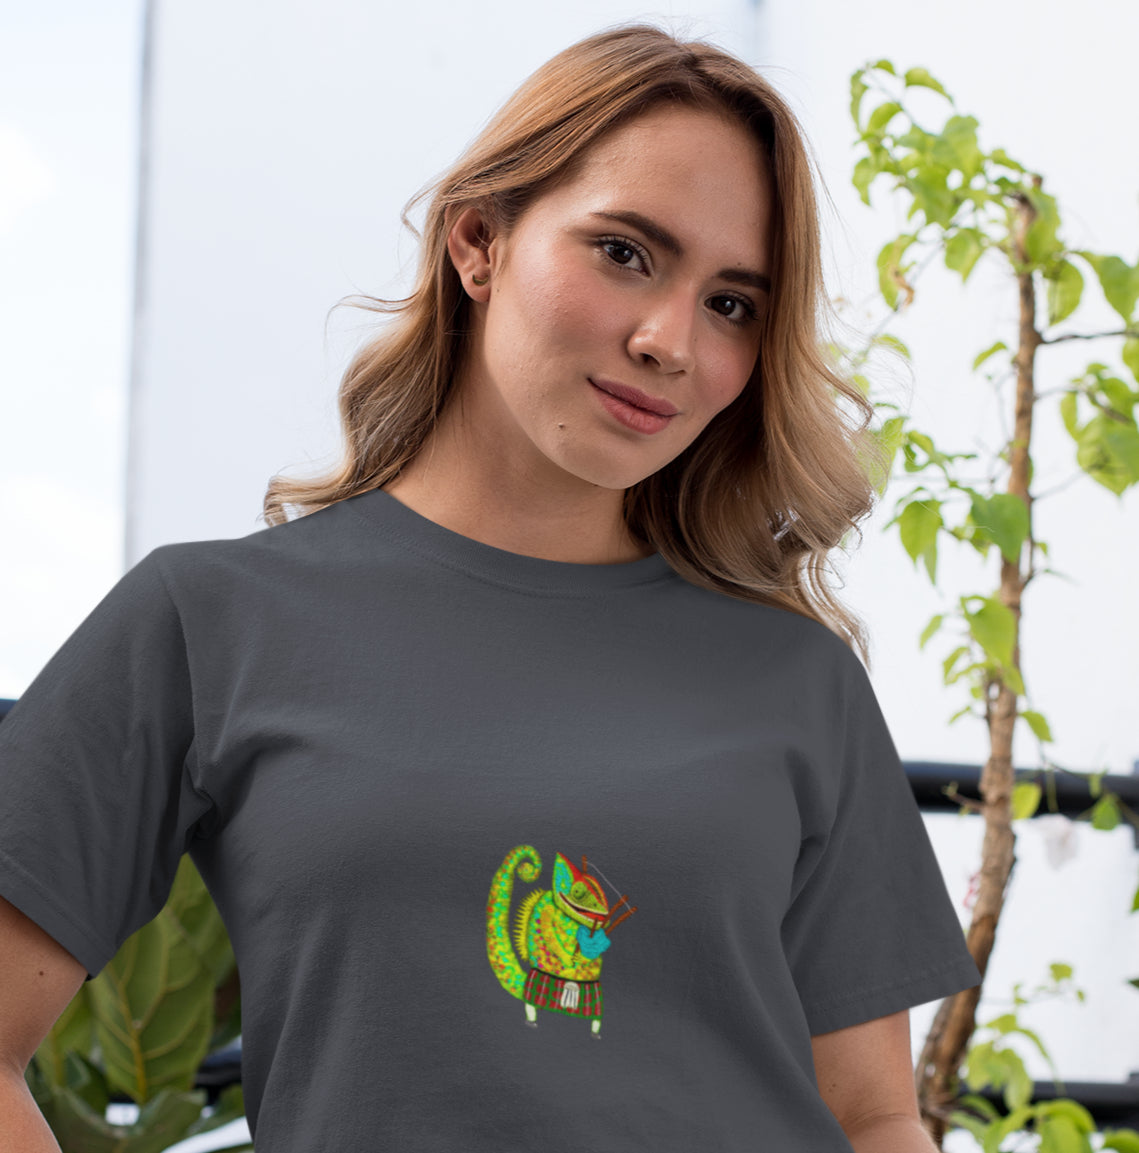 Bagpiper Chameleon | 100% Organic Cotton T Shirt worn by a woman